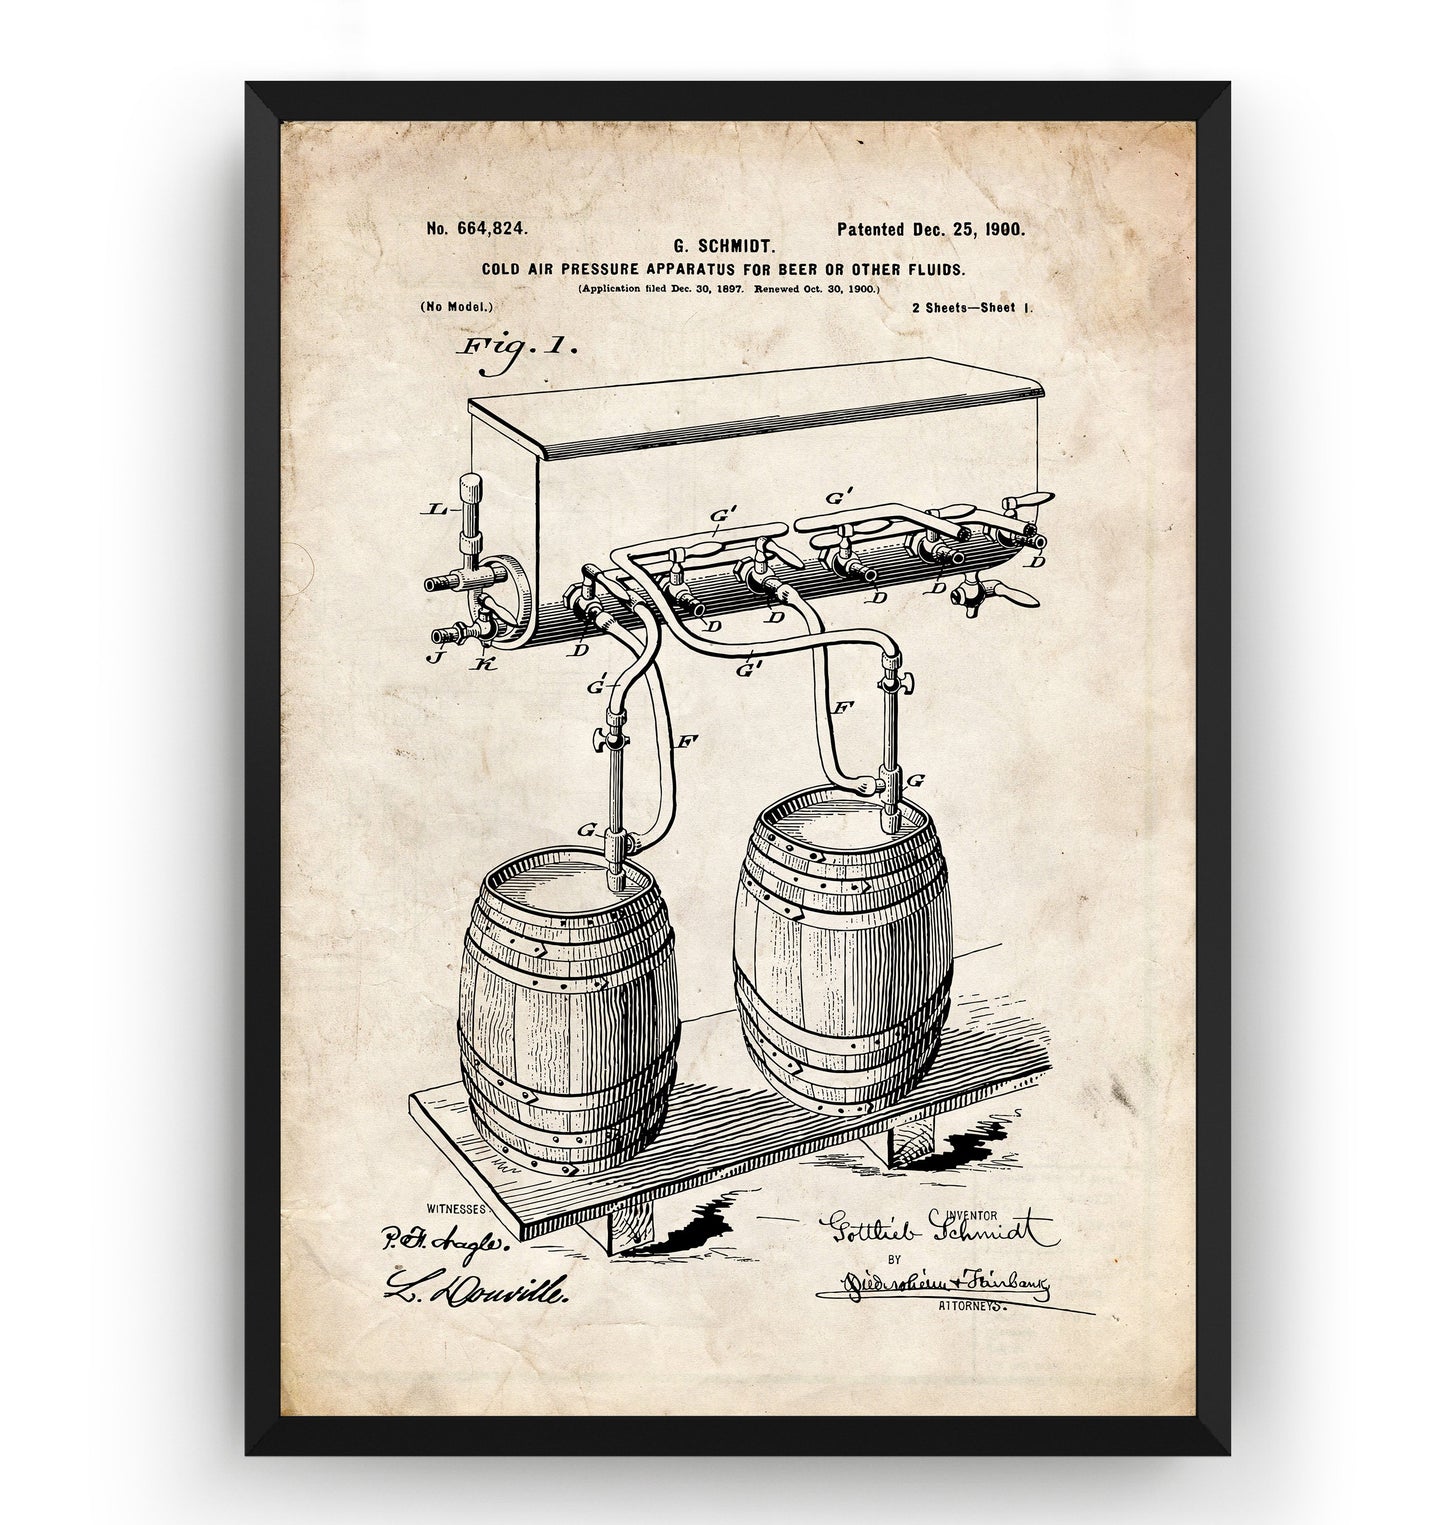 Cold Air Pressure Apparatus For Beer Brewing Patent Print - Magic Posters